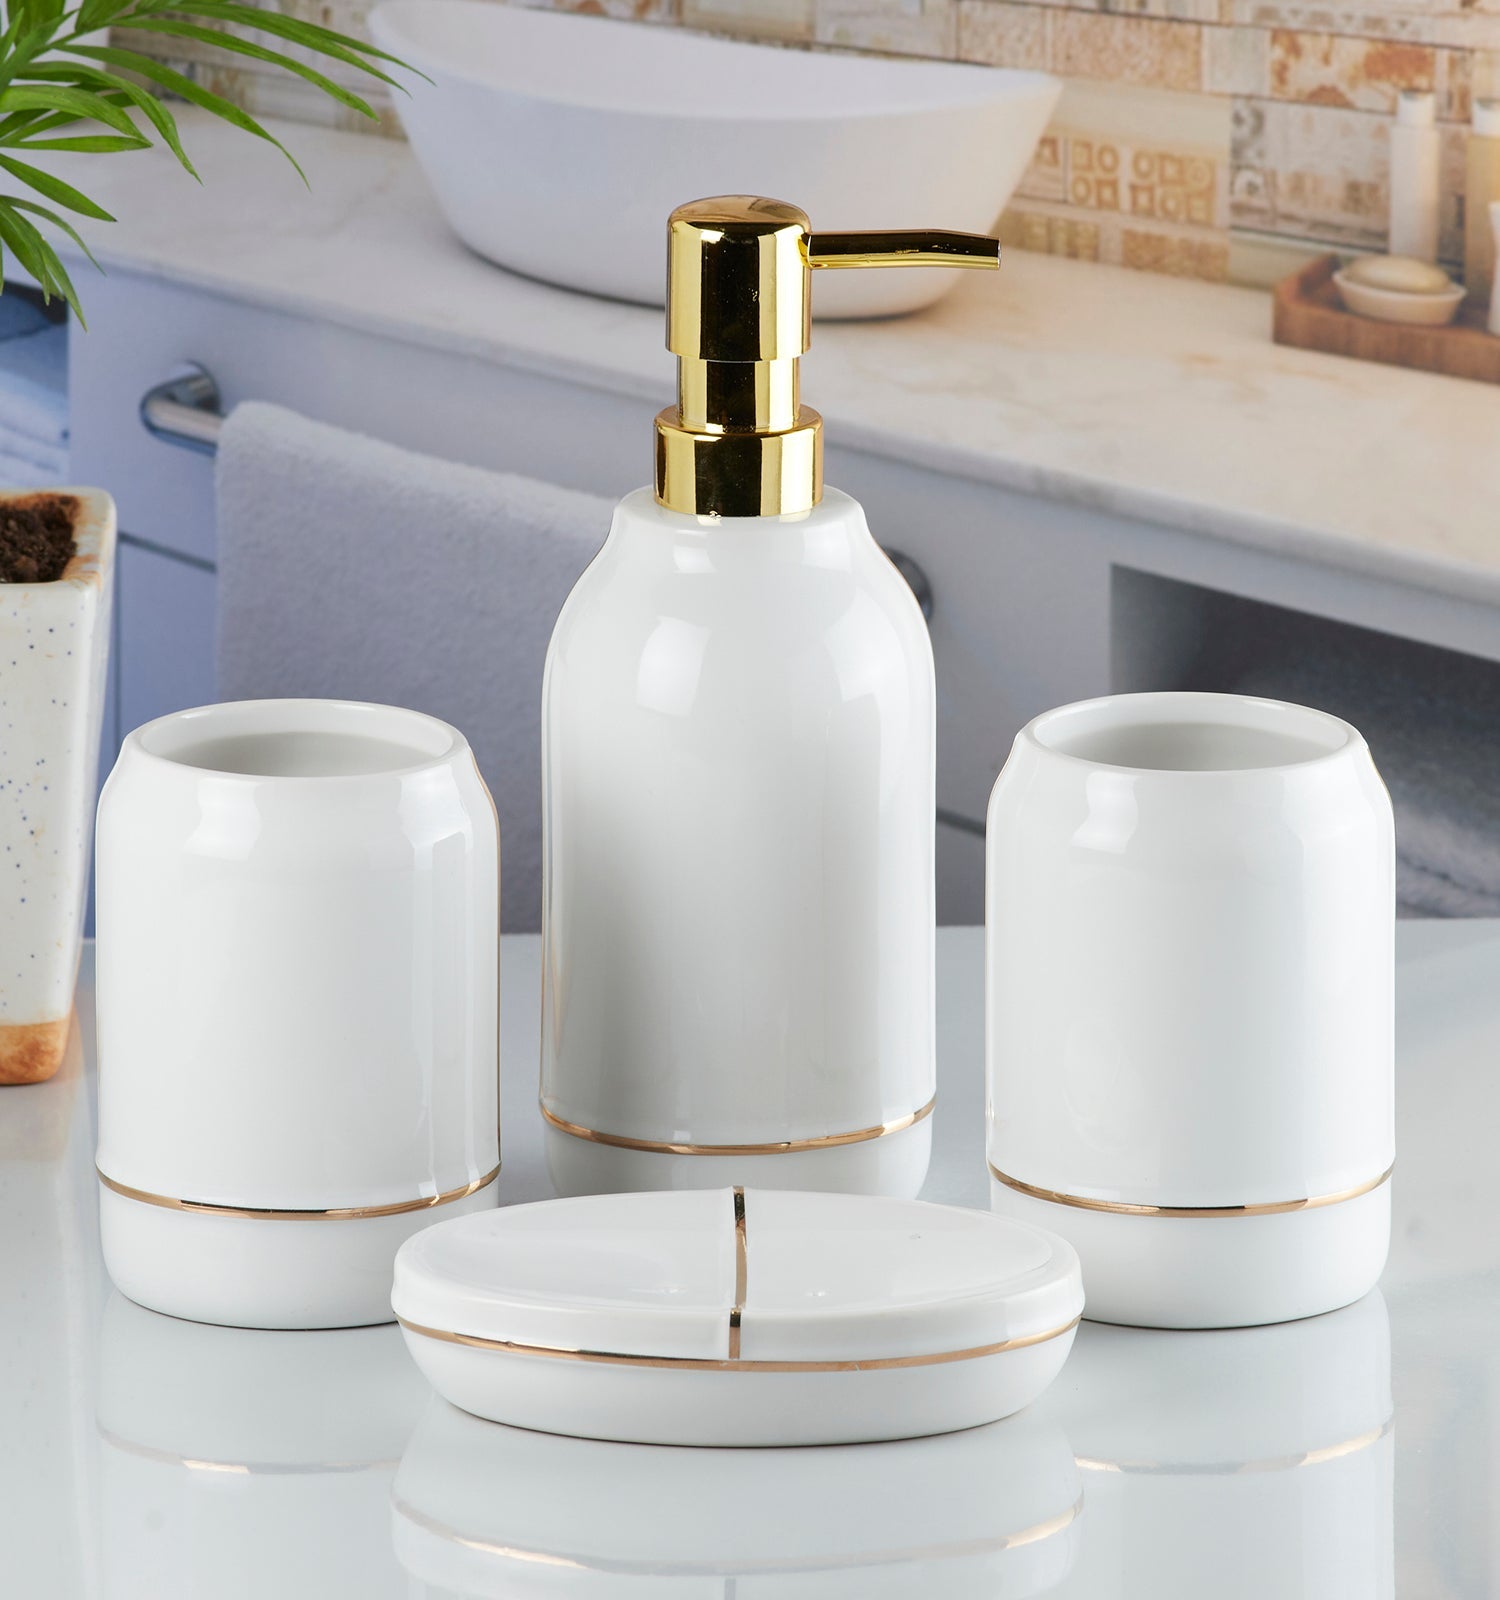 Ceramic Bathroom Accessories Set of 4 Bath Set with Soap Dispenser (8487)